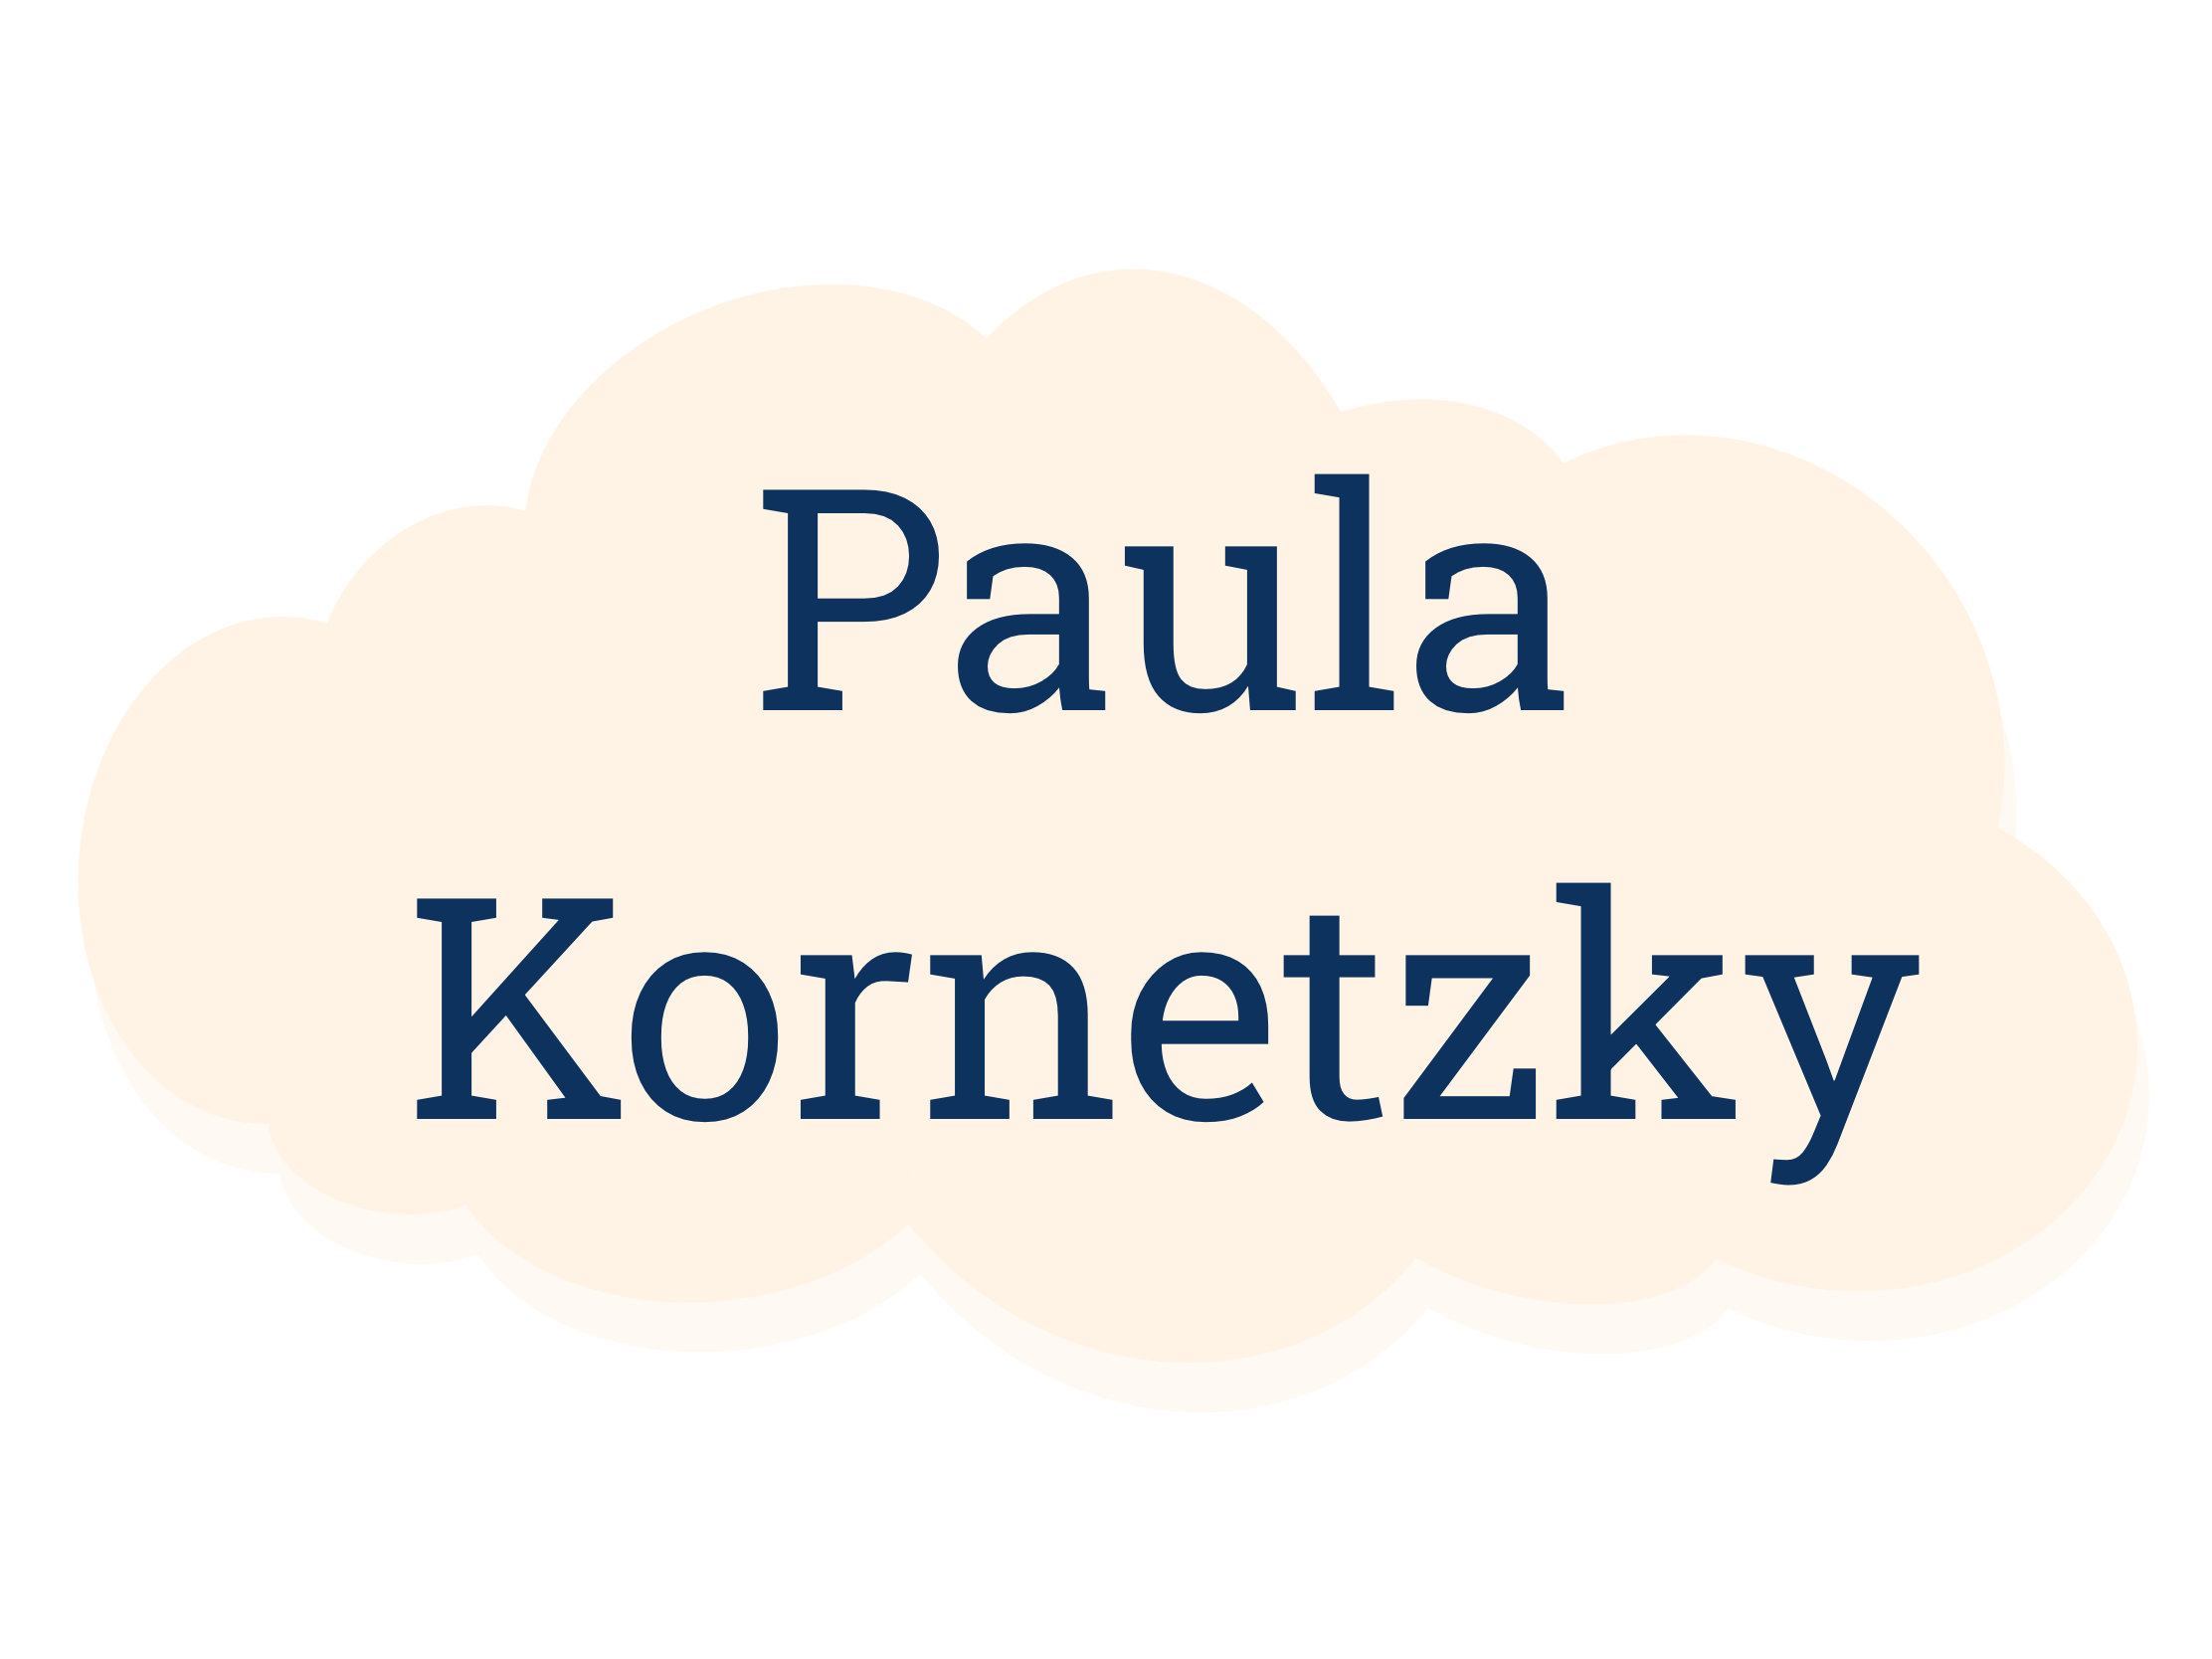 Wolke Name: Paula Kornetzky